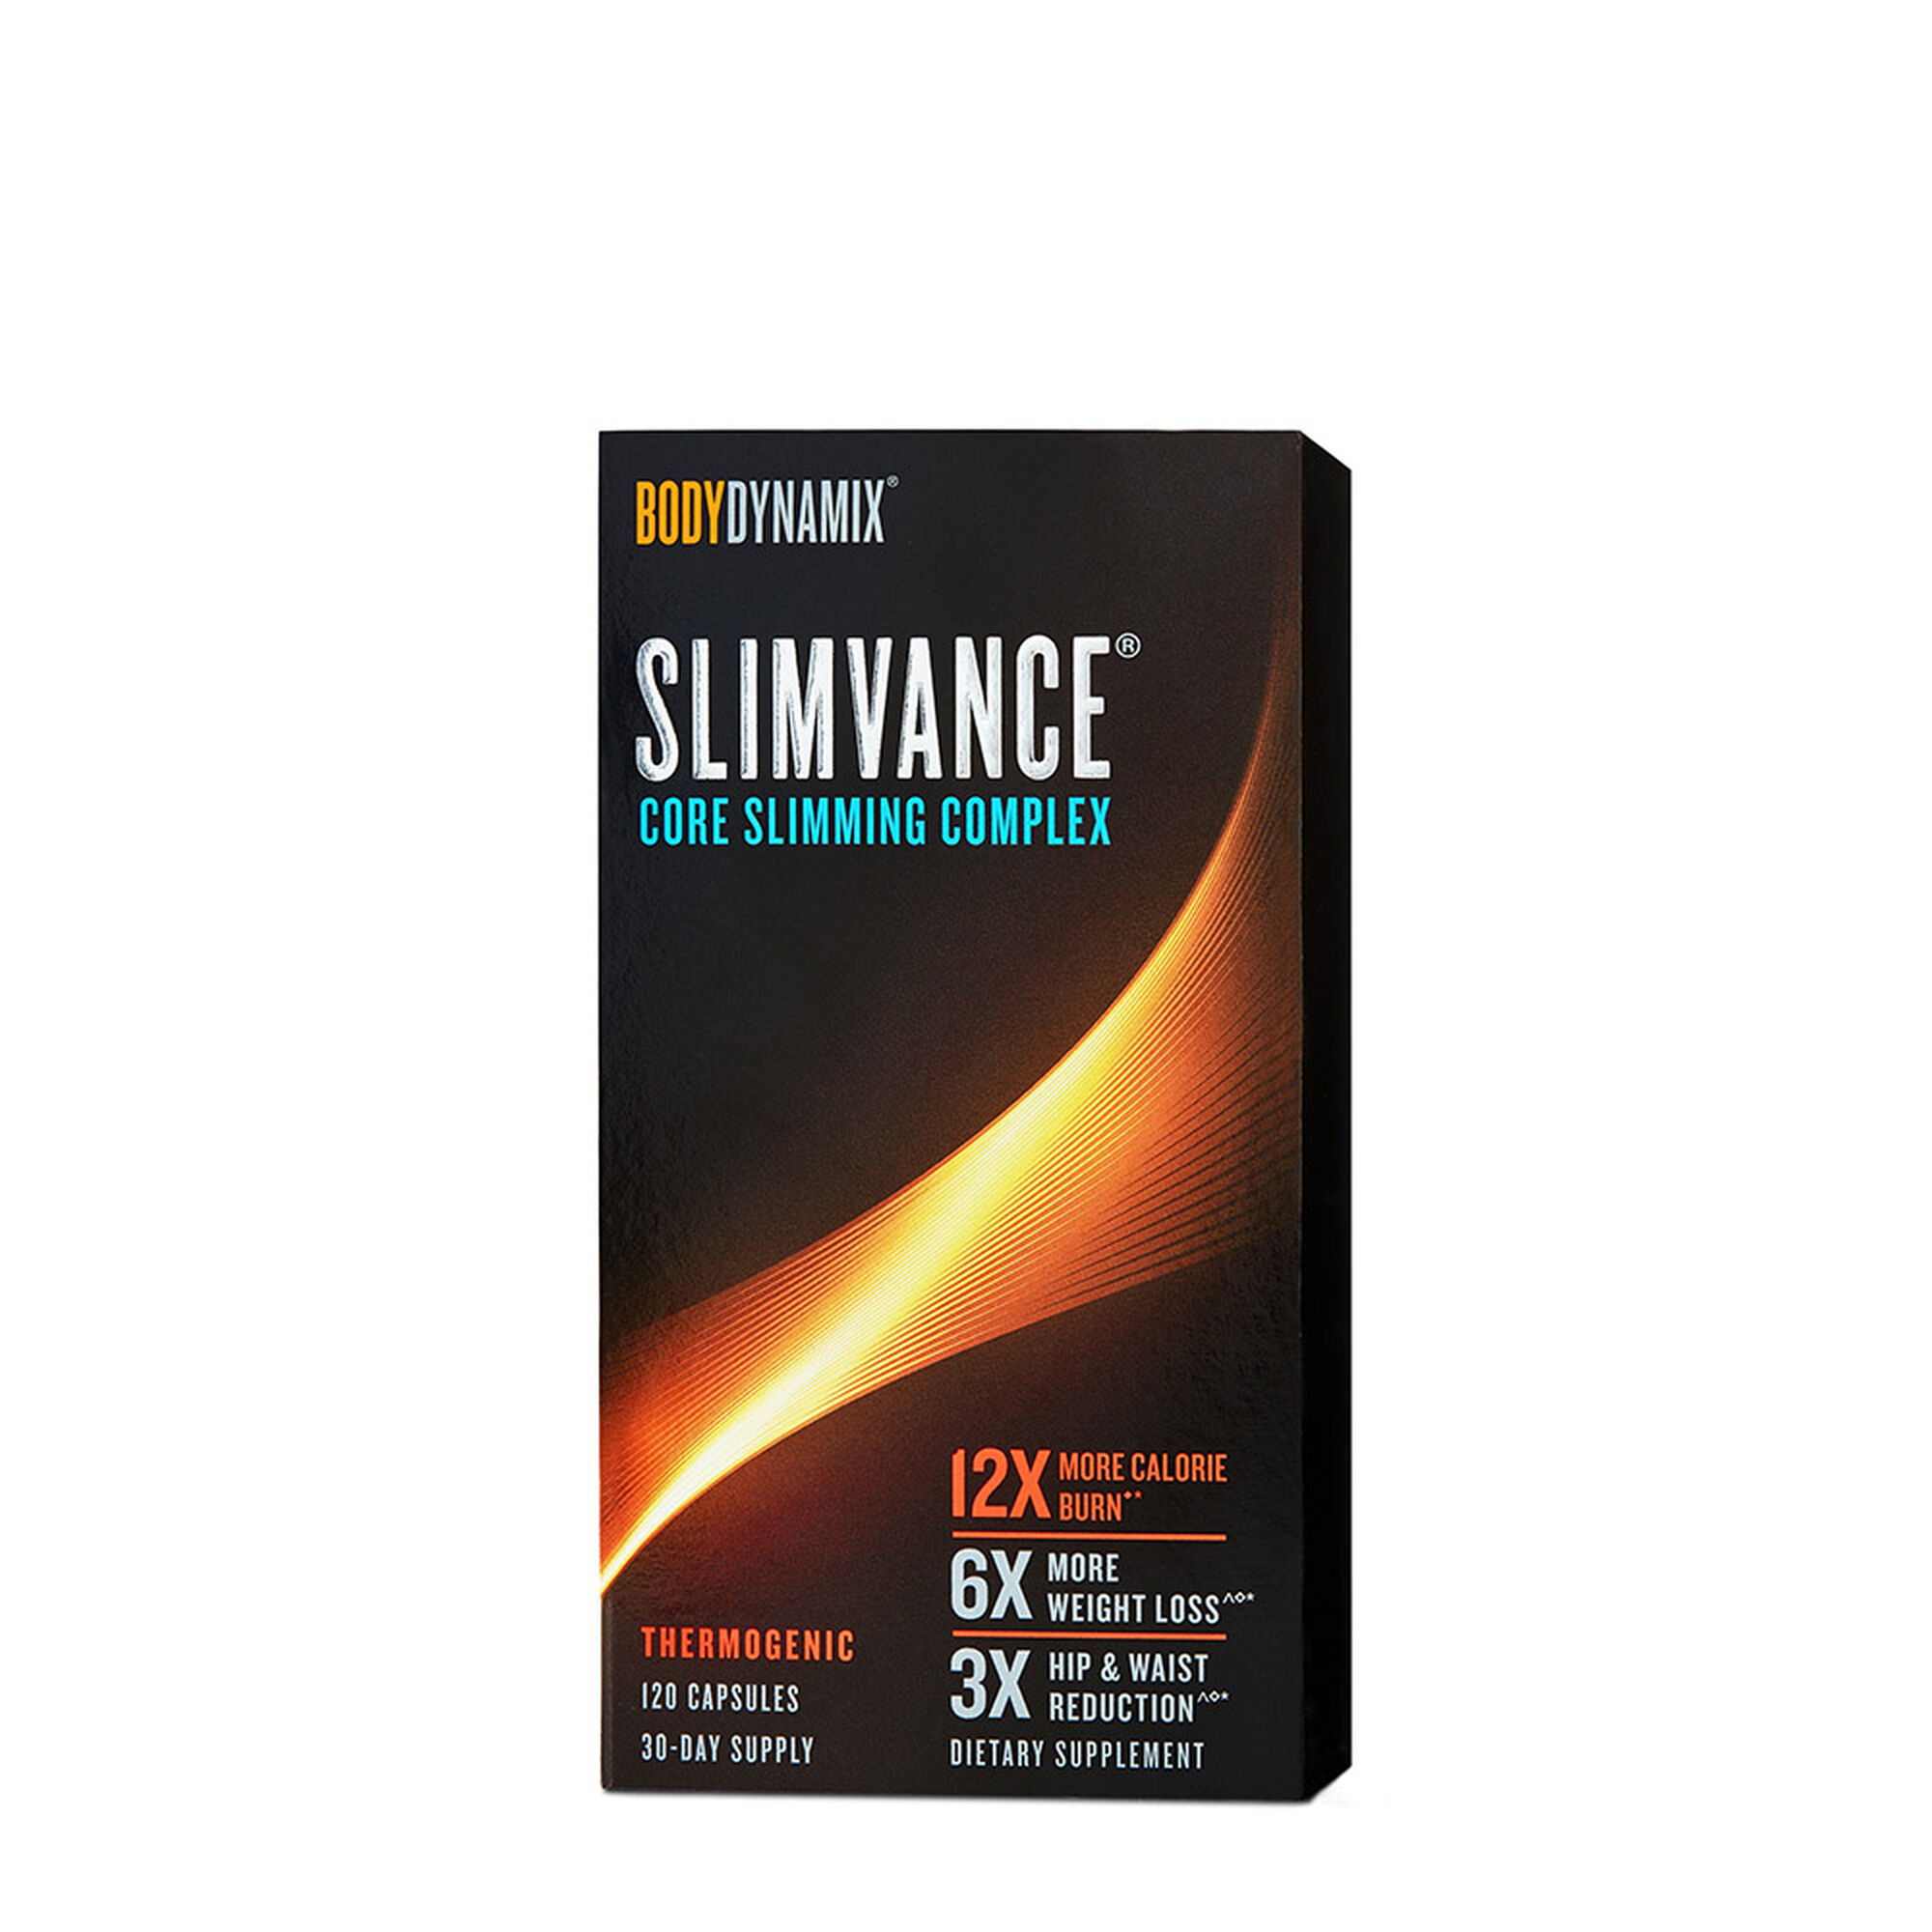 Bodydynamix slimvance core slimming 60cps